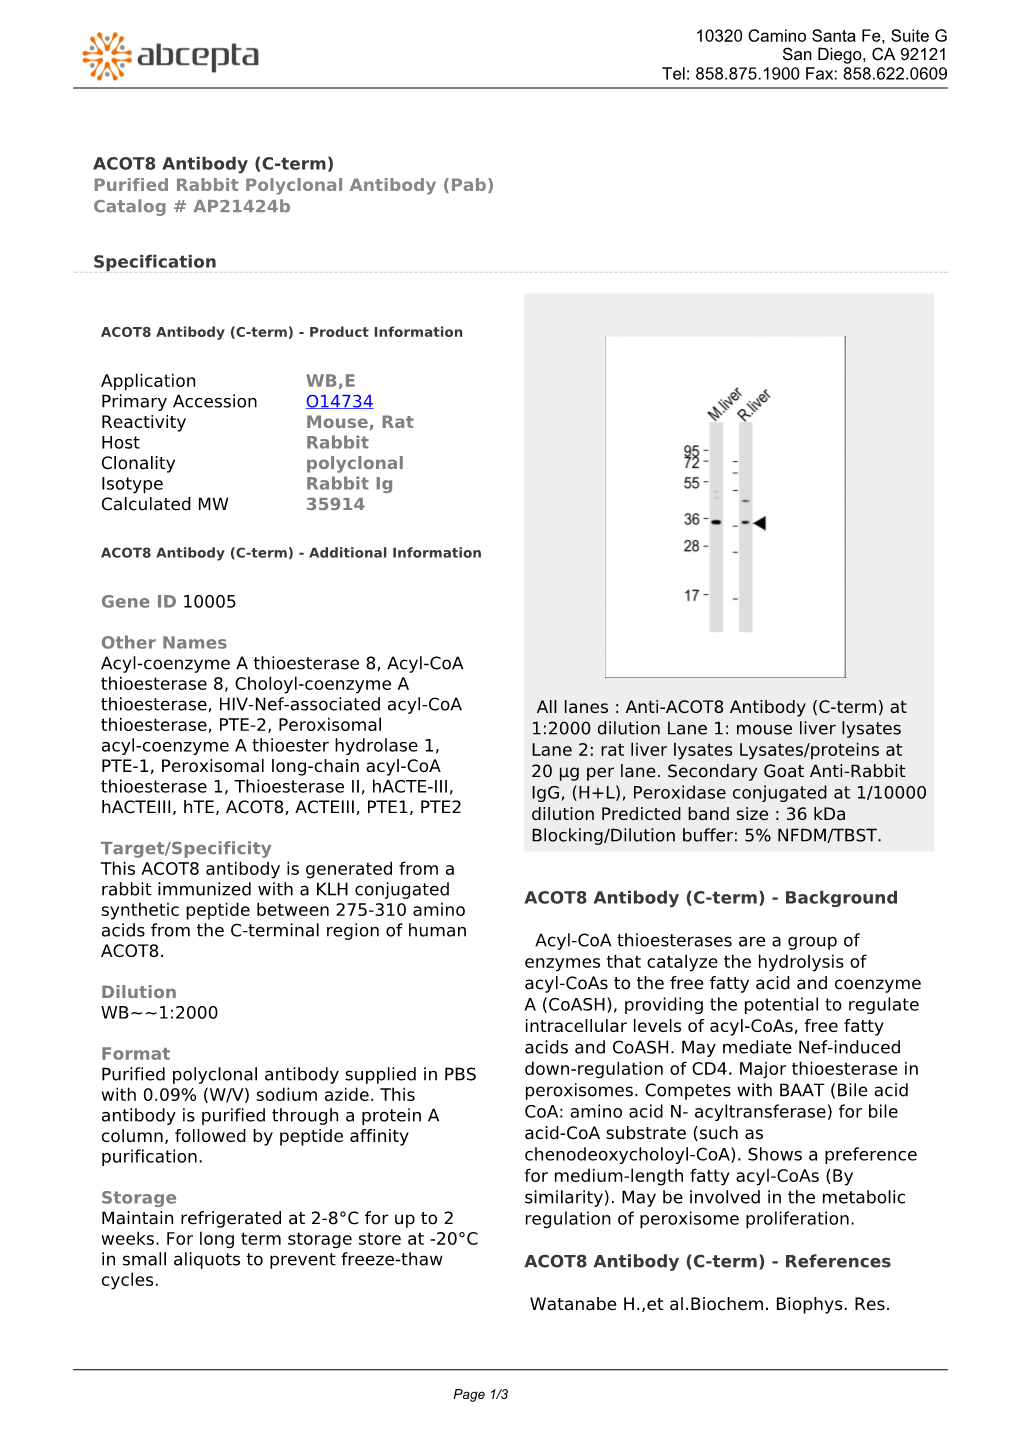 ACOT8 Antibody (C-Term) Purified Rabbit Polyclonal Antibody (Pab) Catalog # Ap21424b